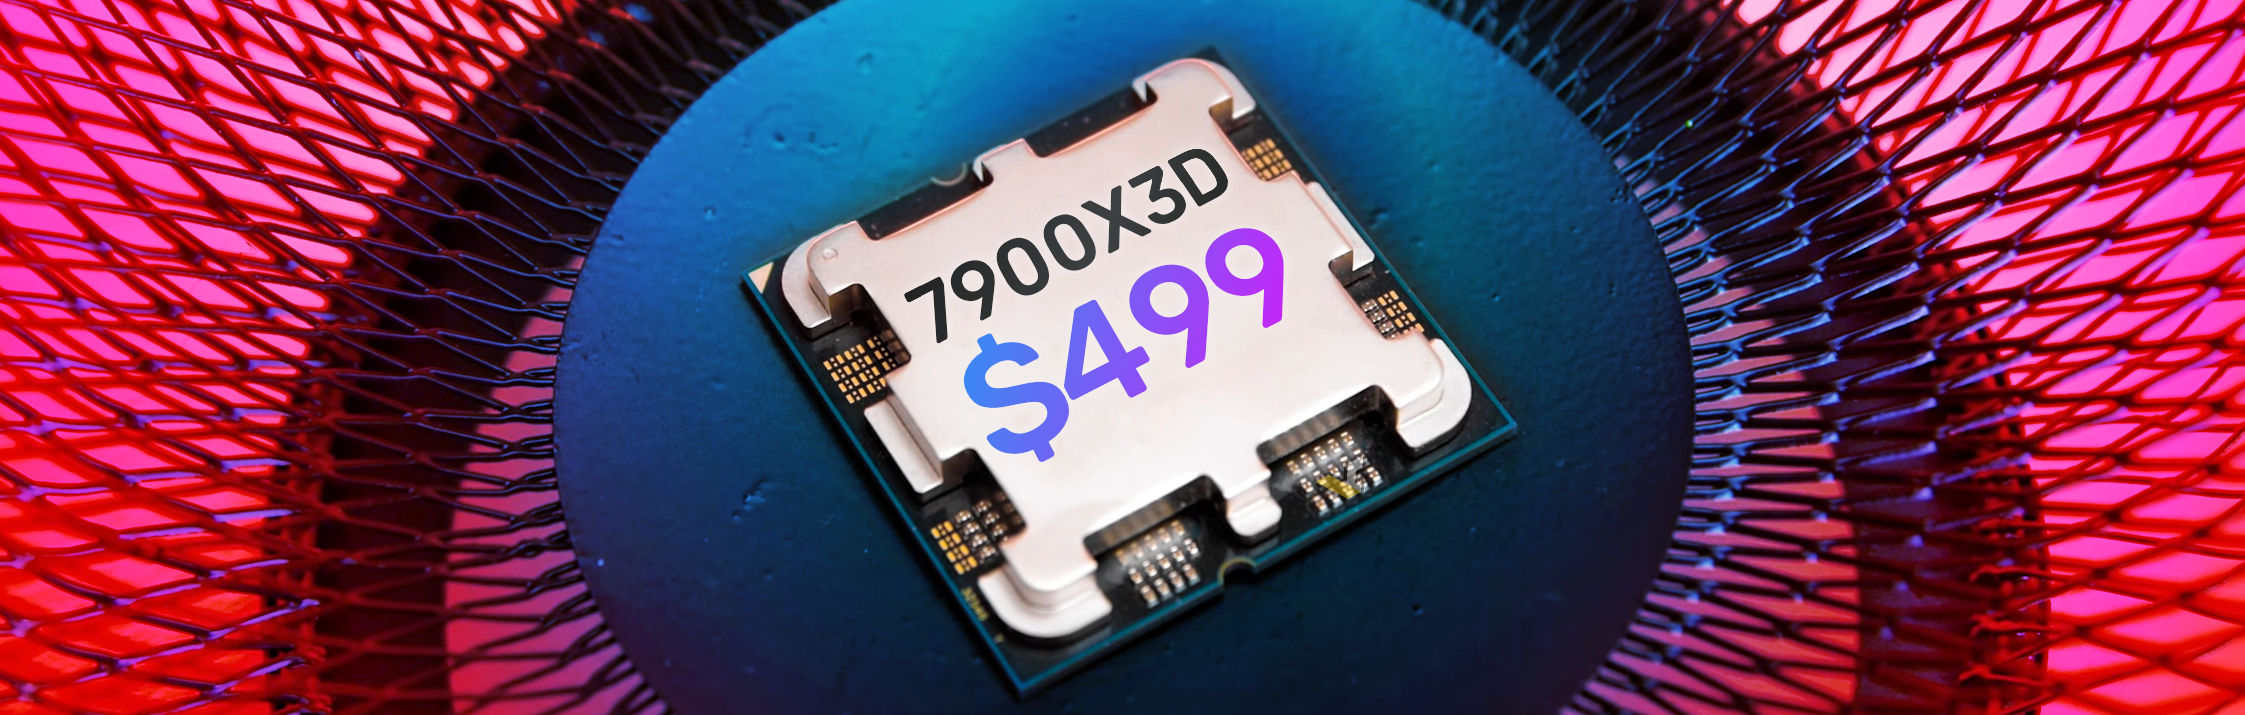 AMD Ryzen 7 7800 X3D - Hottest CPU in Stock Now! - Newegg